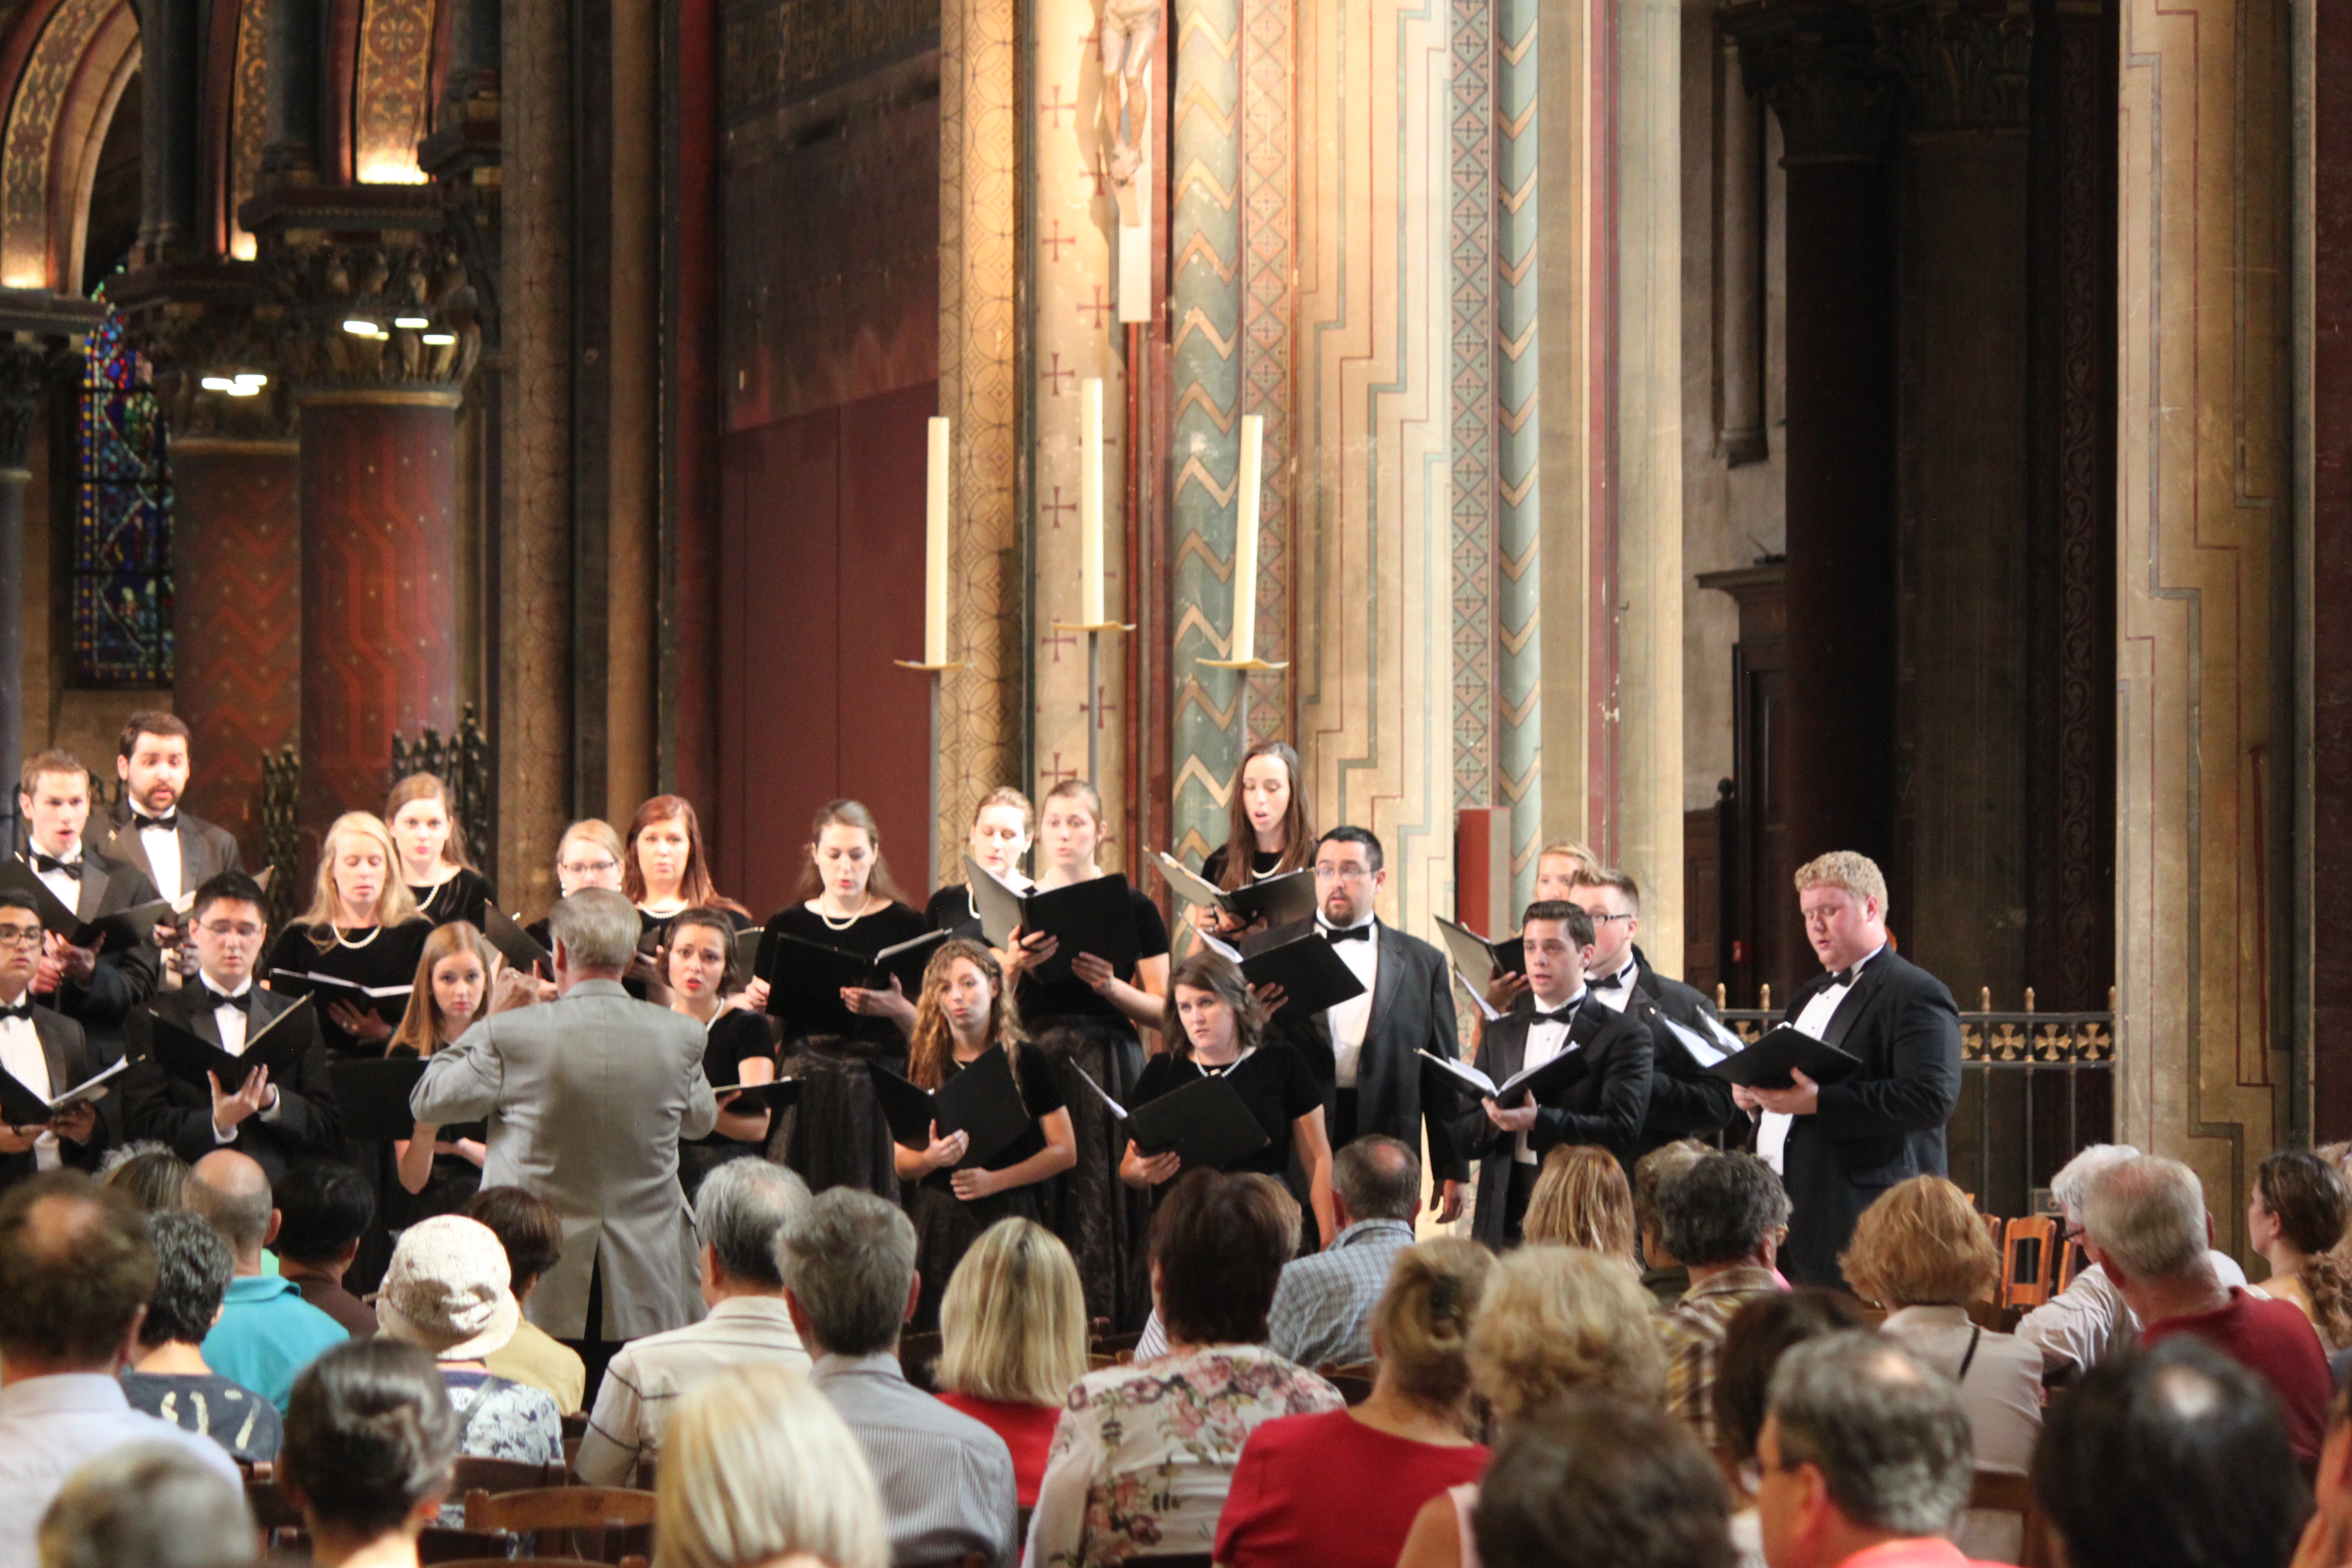 Oklahoma Oklahoma State University Concert Chorale performance at St-Germain-des-Prés in Paris, France (2013)